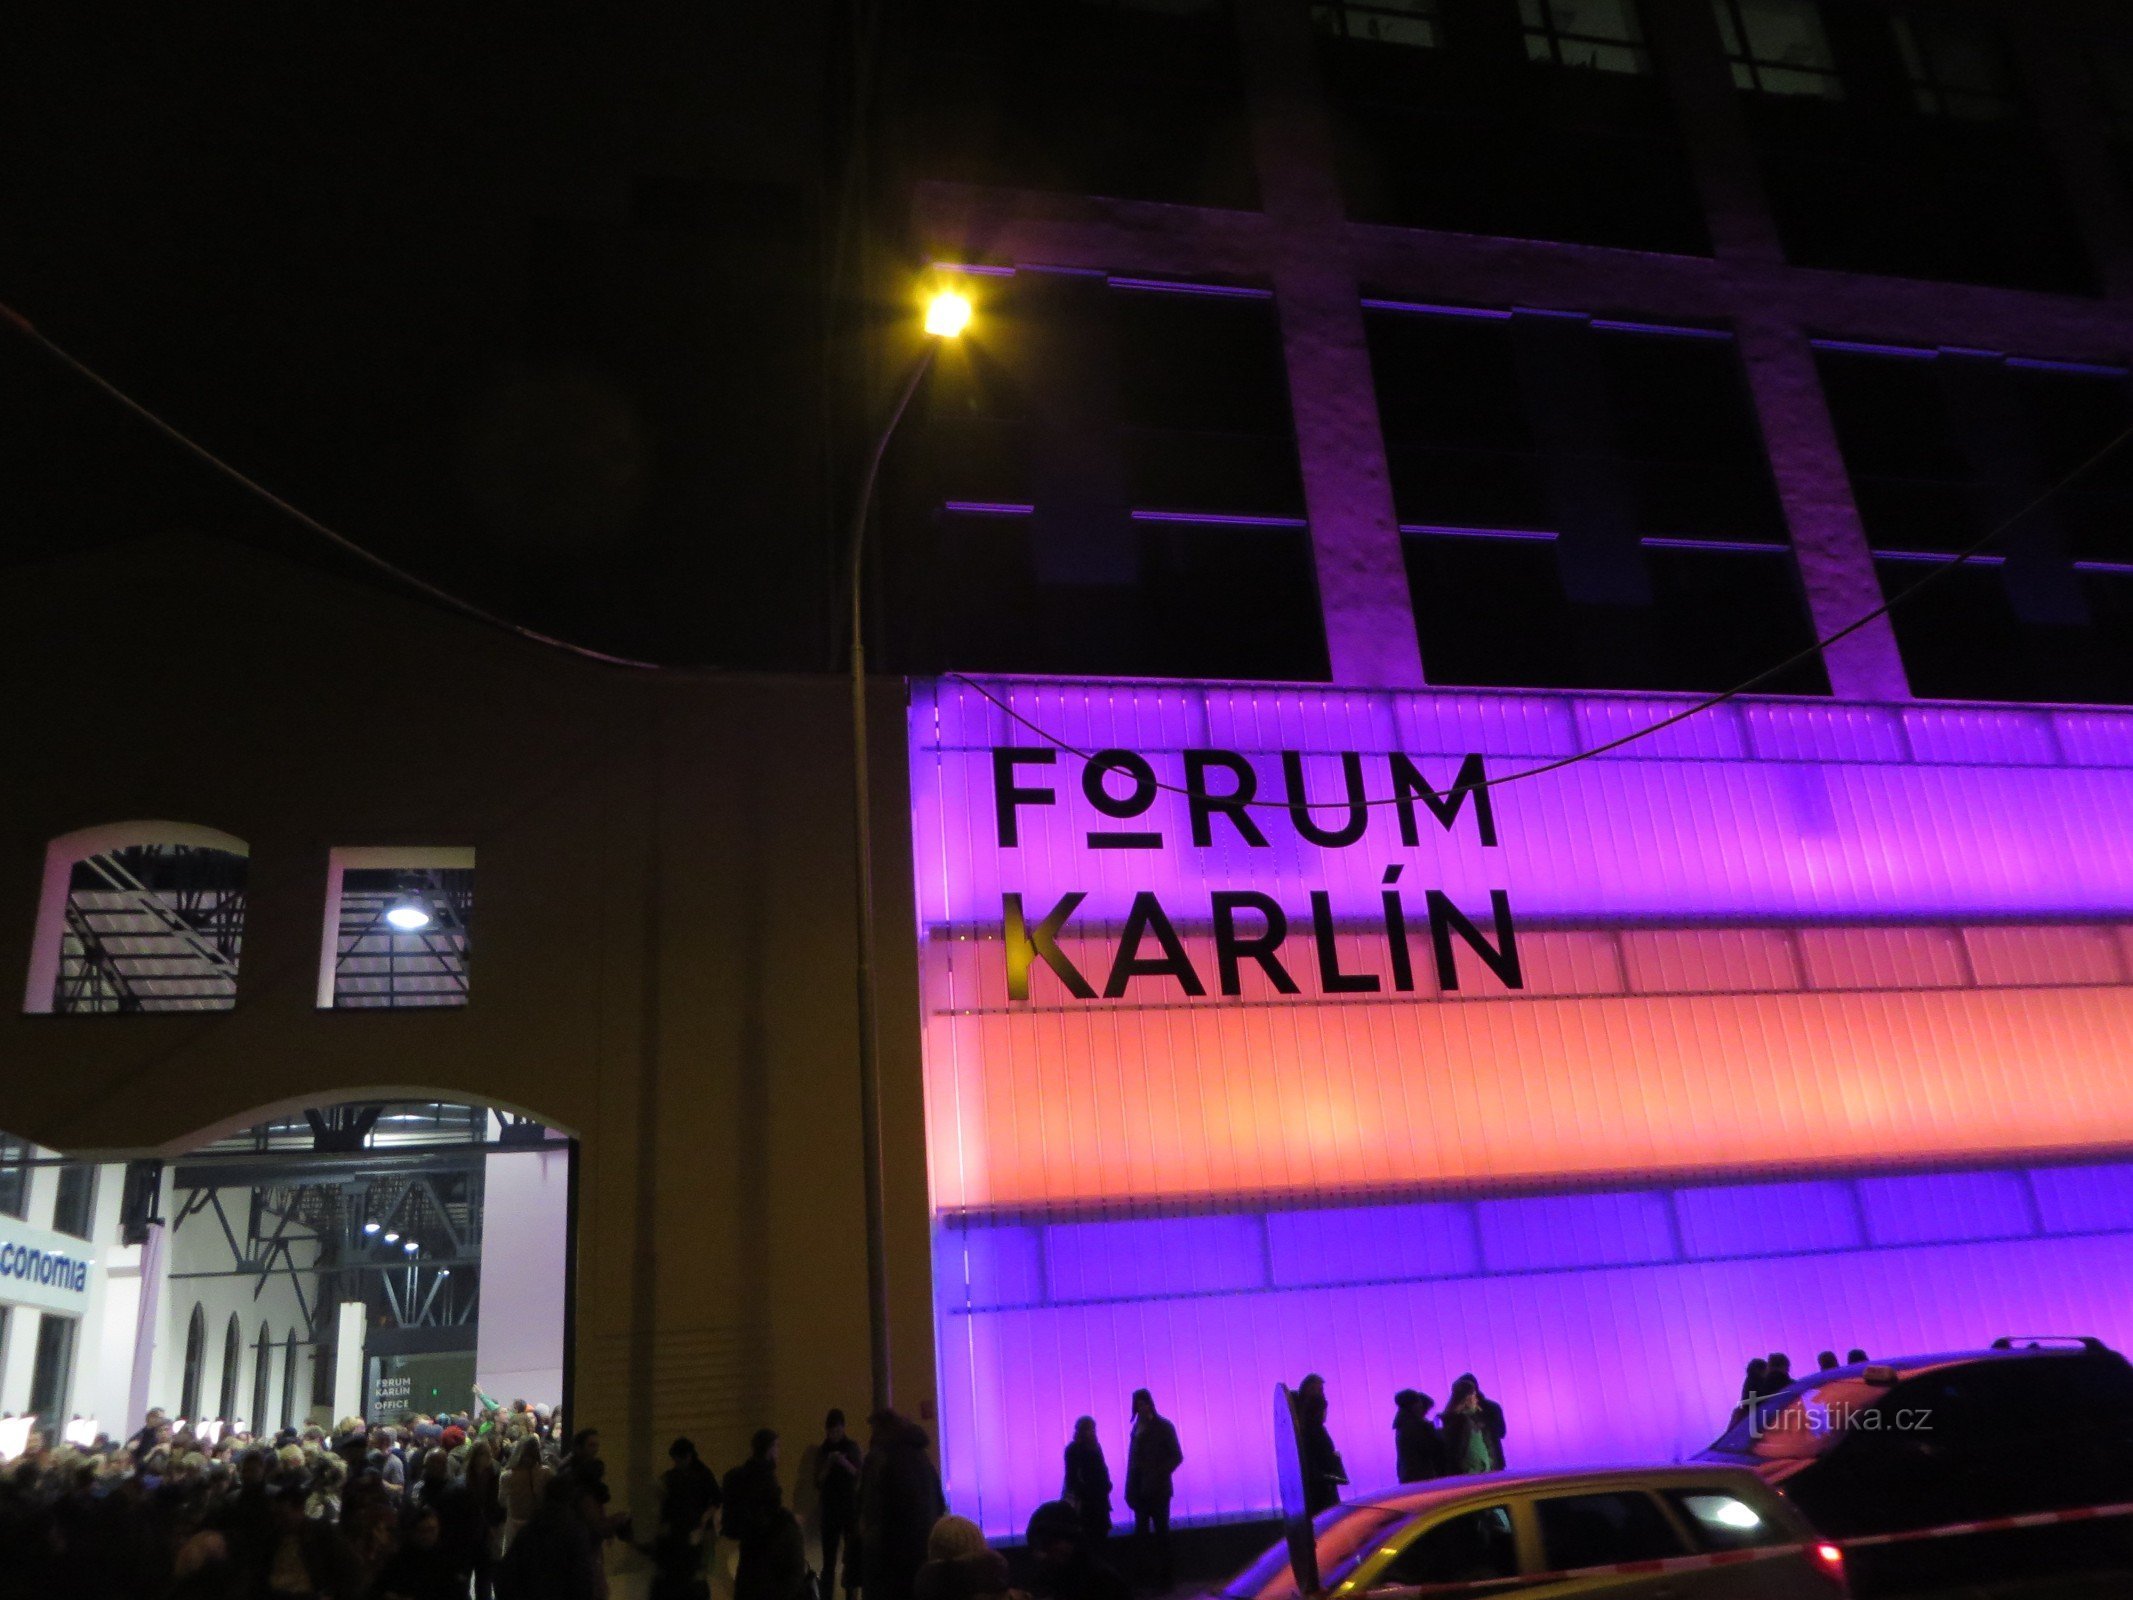 Forum Karlin